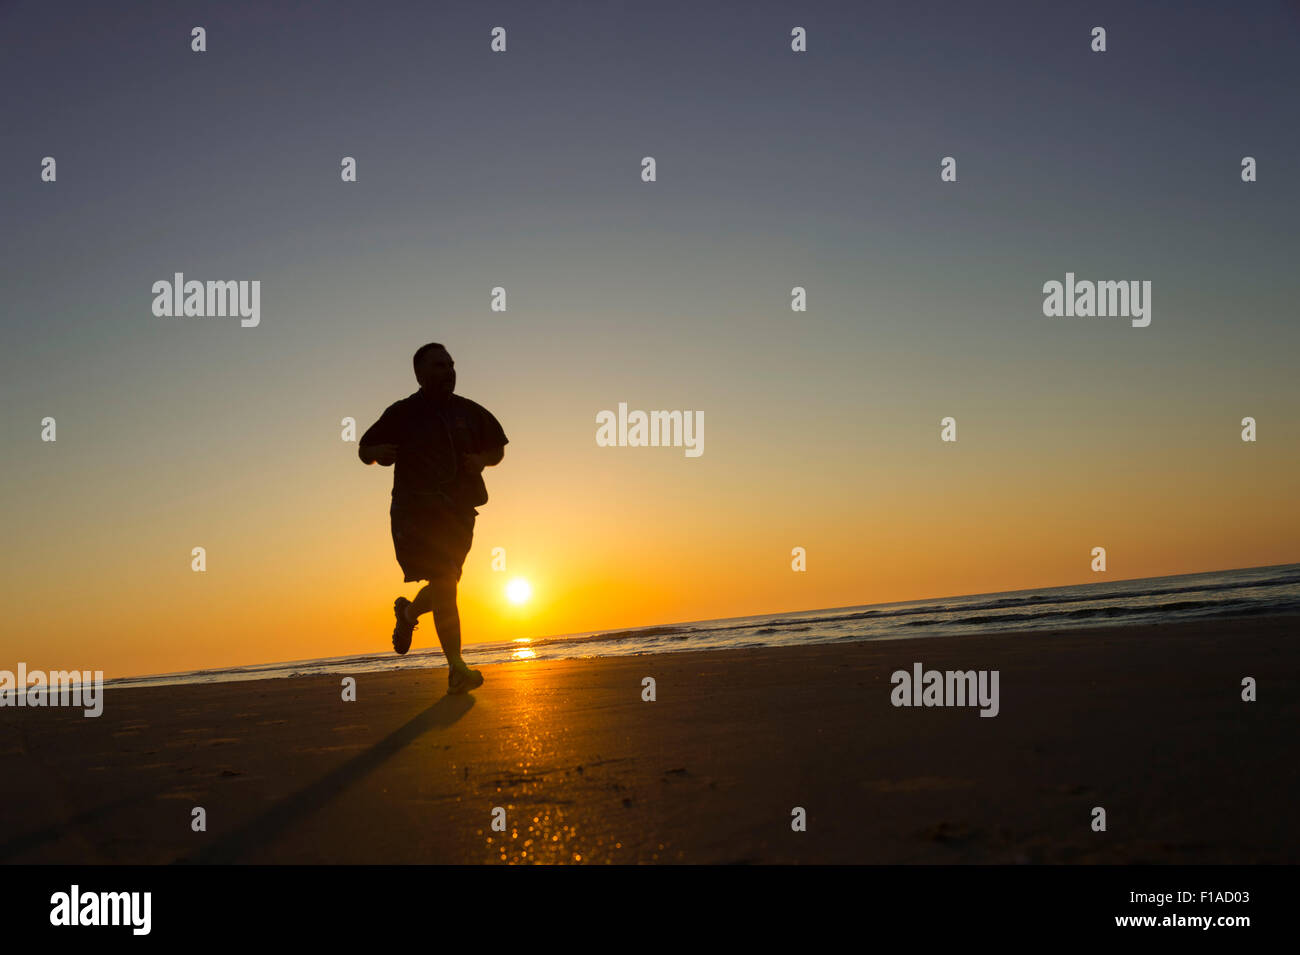 Over Weight Runner Running On Beach At Sunrise Stock Photo